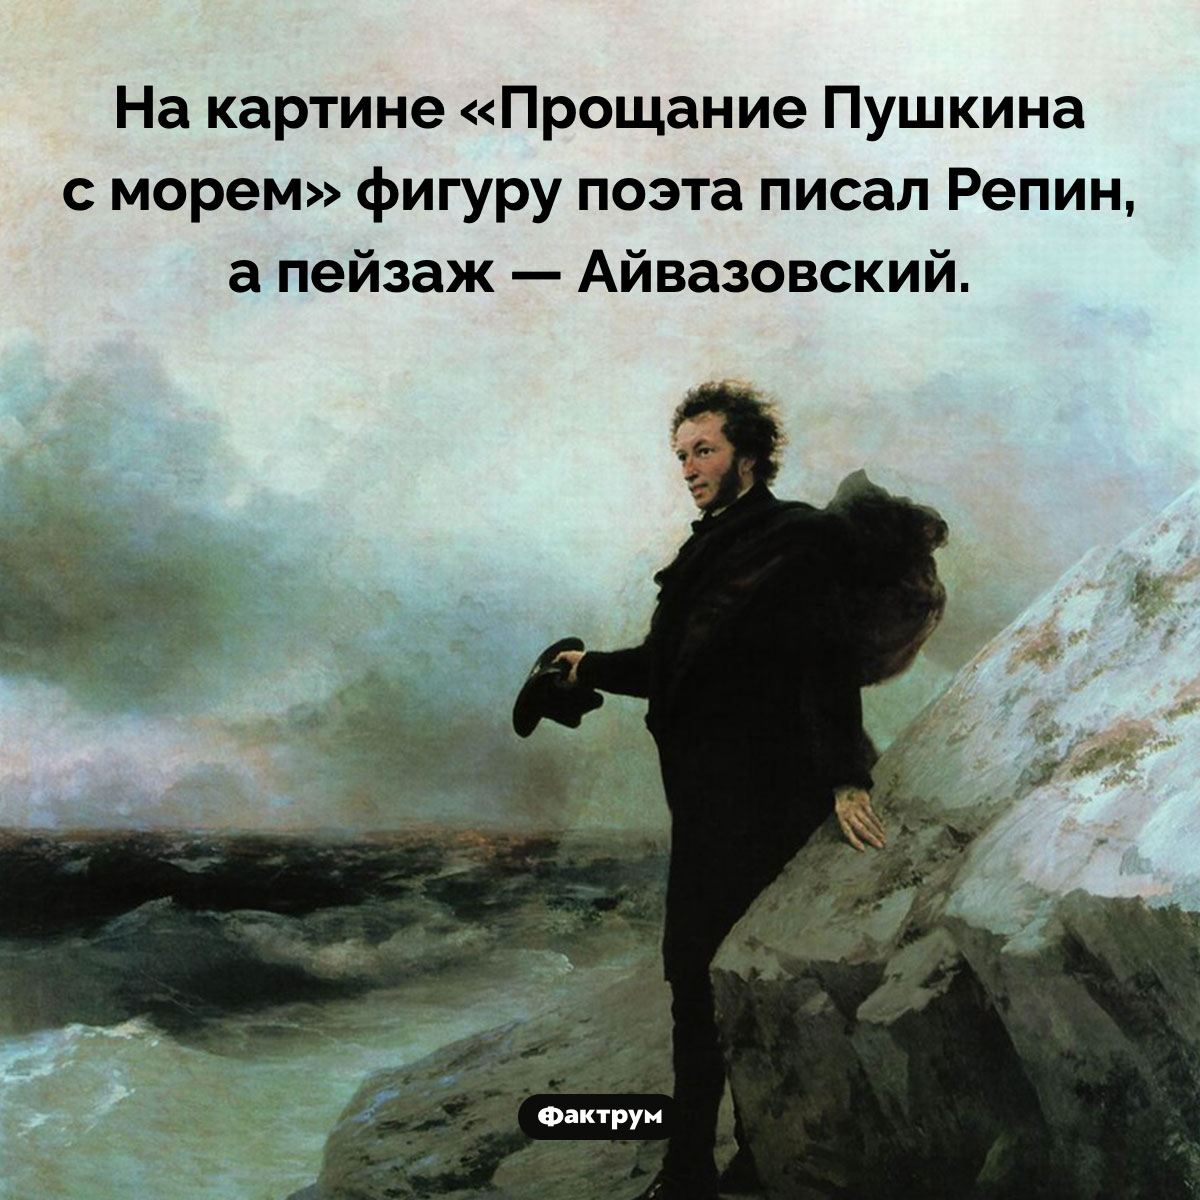 Кто написал картину «Прощание Пушкина с морем». На картине «Прощание Пушкина с морем» фигуру поэта писал Репин, а пейзаж — Айвазовский.